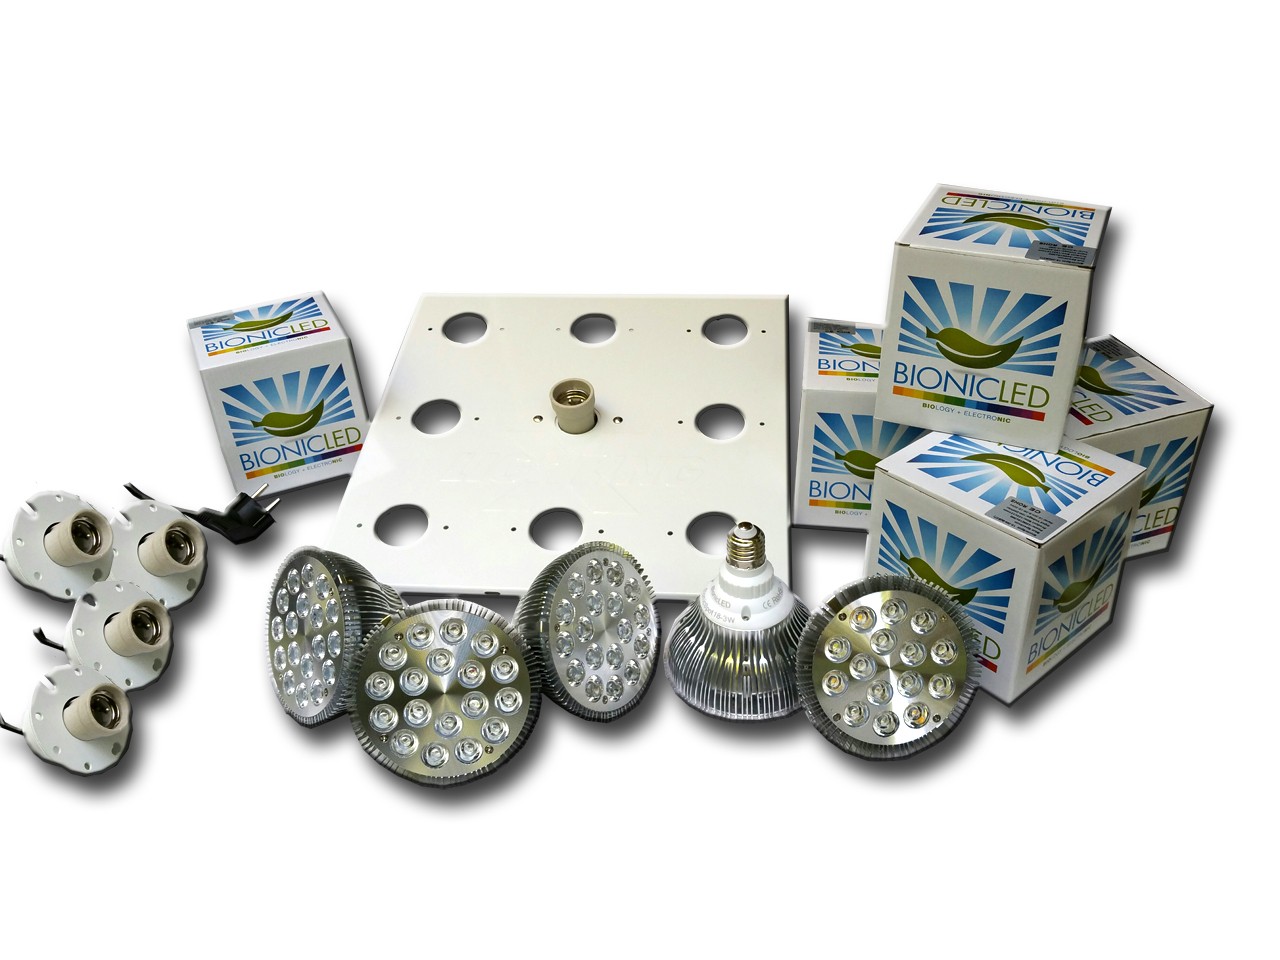 LED - BIONICLED - PACK 4 x BioSpot 54 W + 1 x 45 W - E27 + Douille + Platine